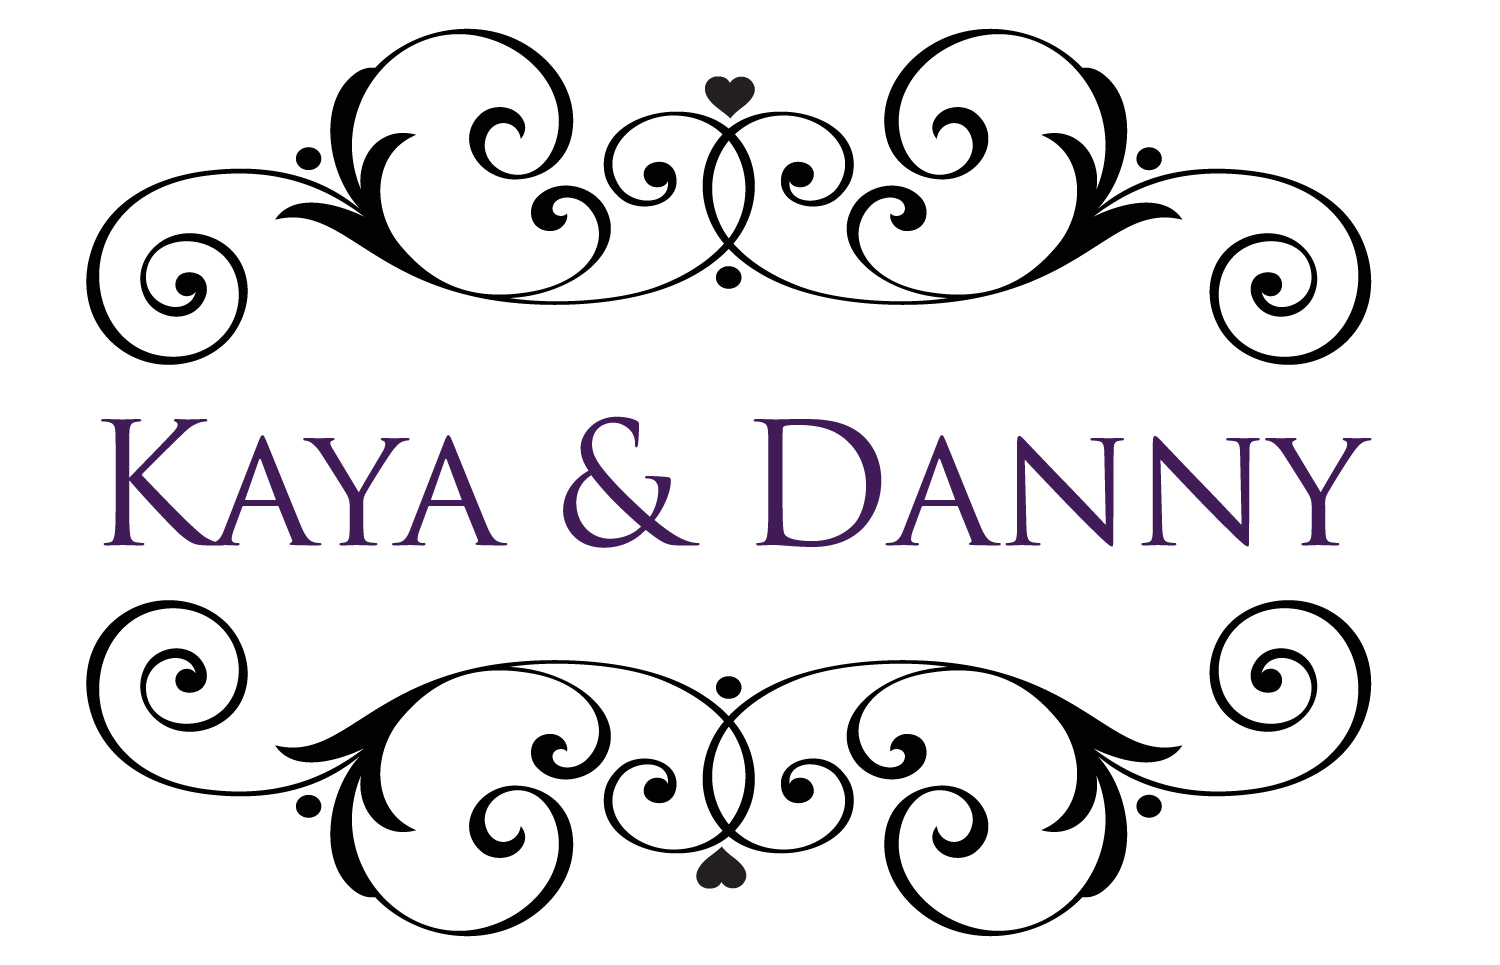 double-trouble-designs-wedding-monograms-wine-bottle-label-for-kaya